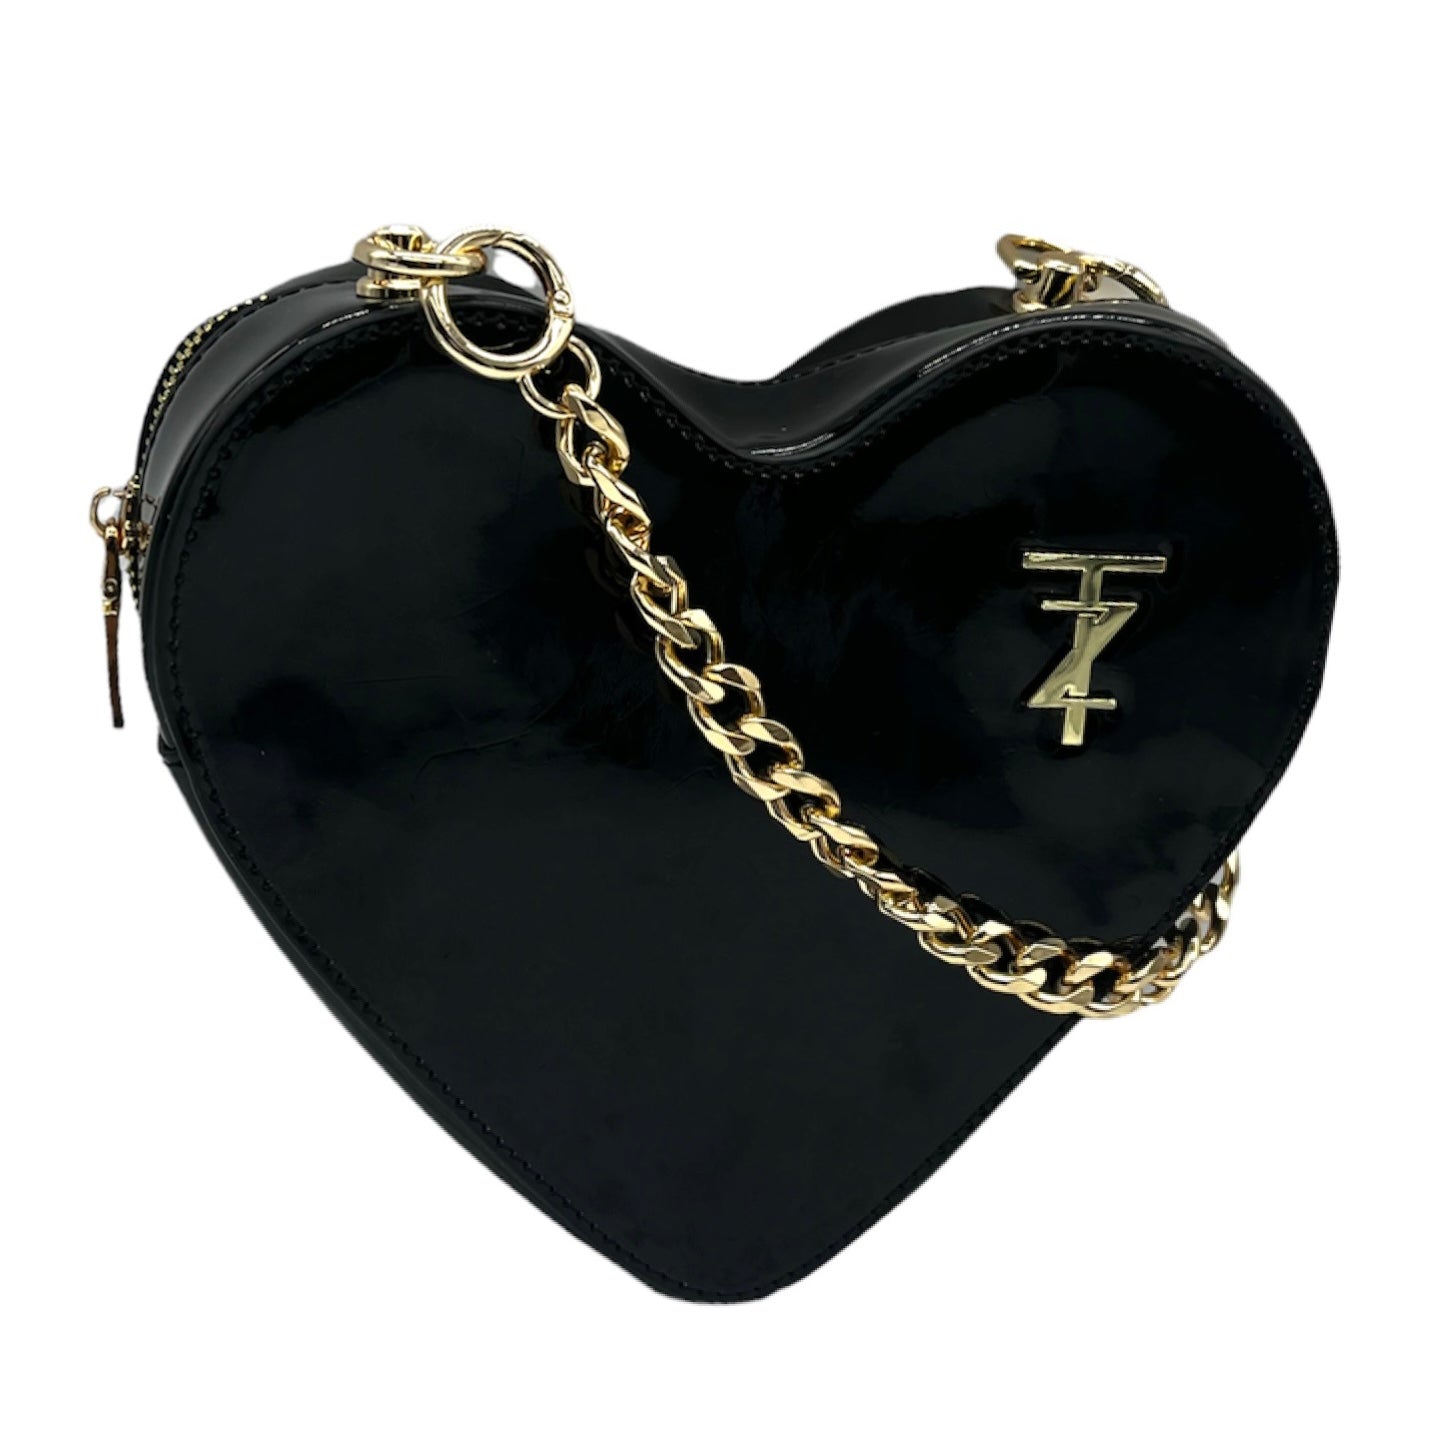 SOV Vol II leather heart bag - Onyx Black